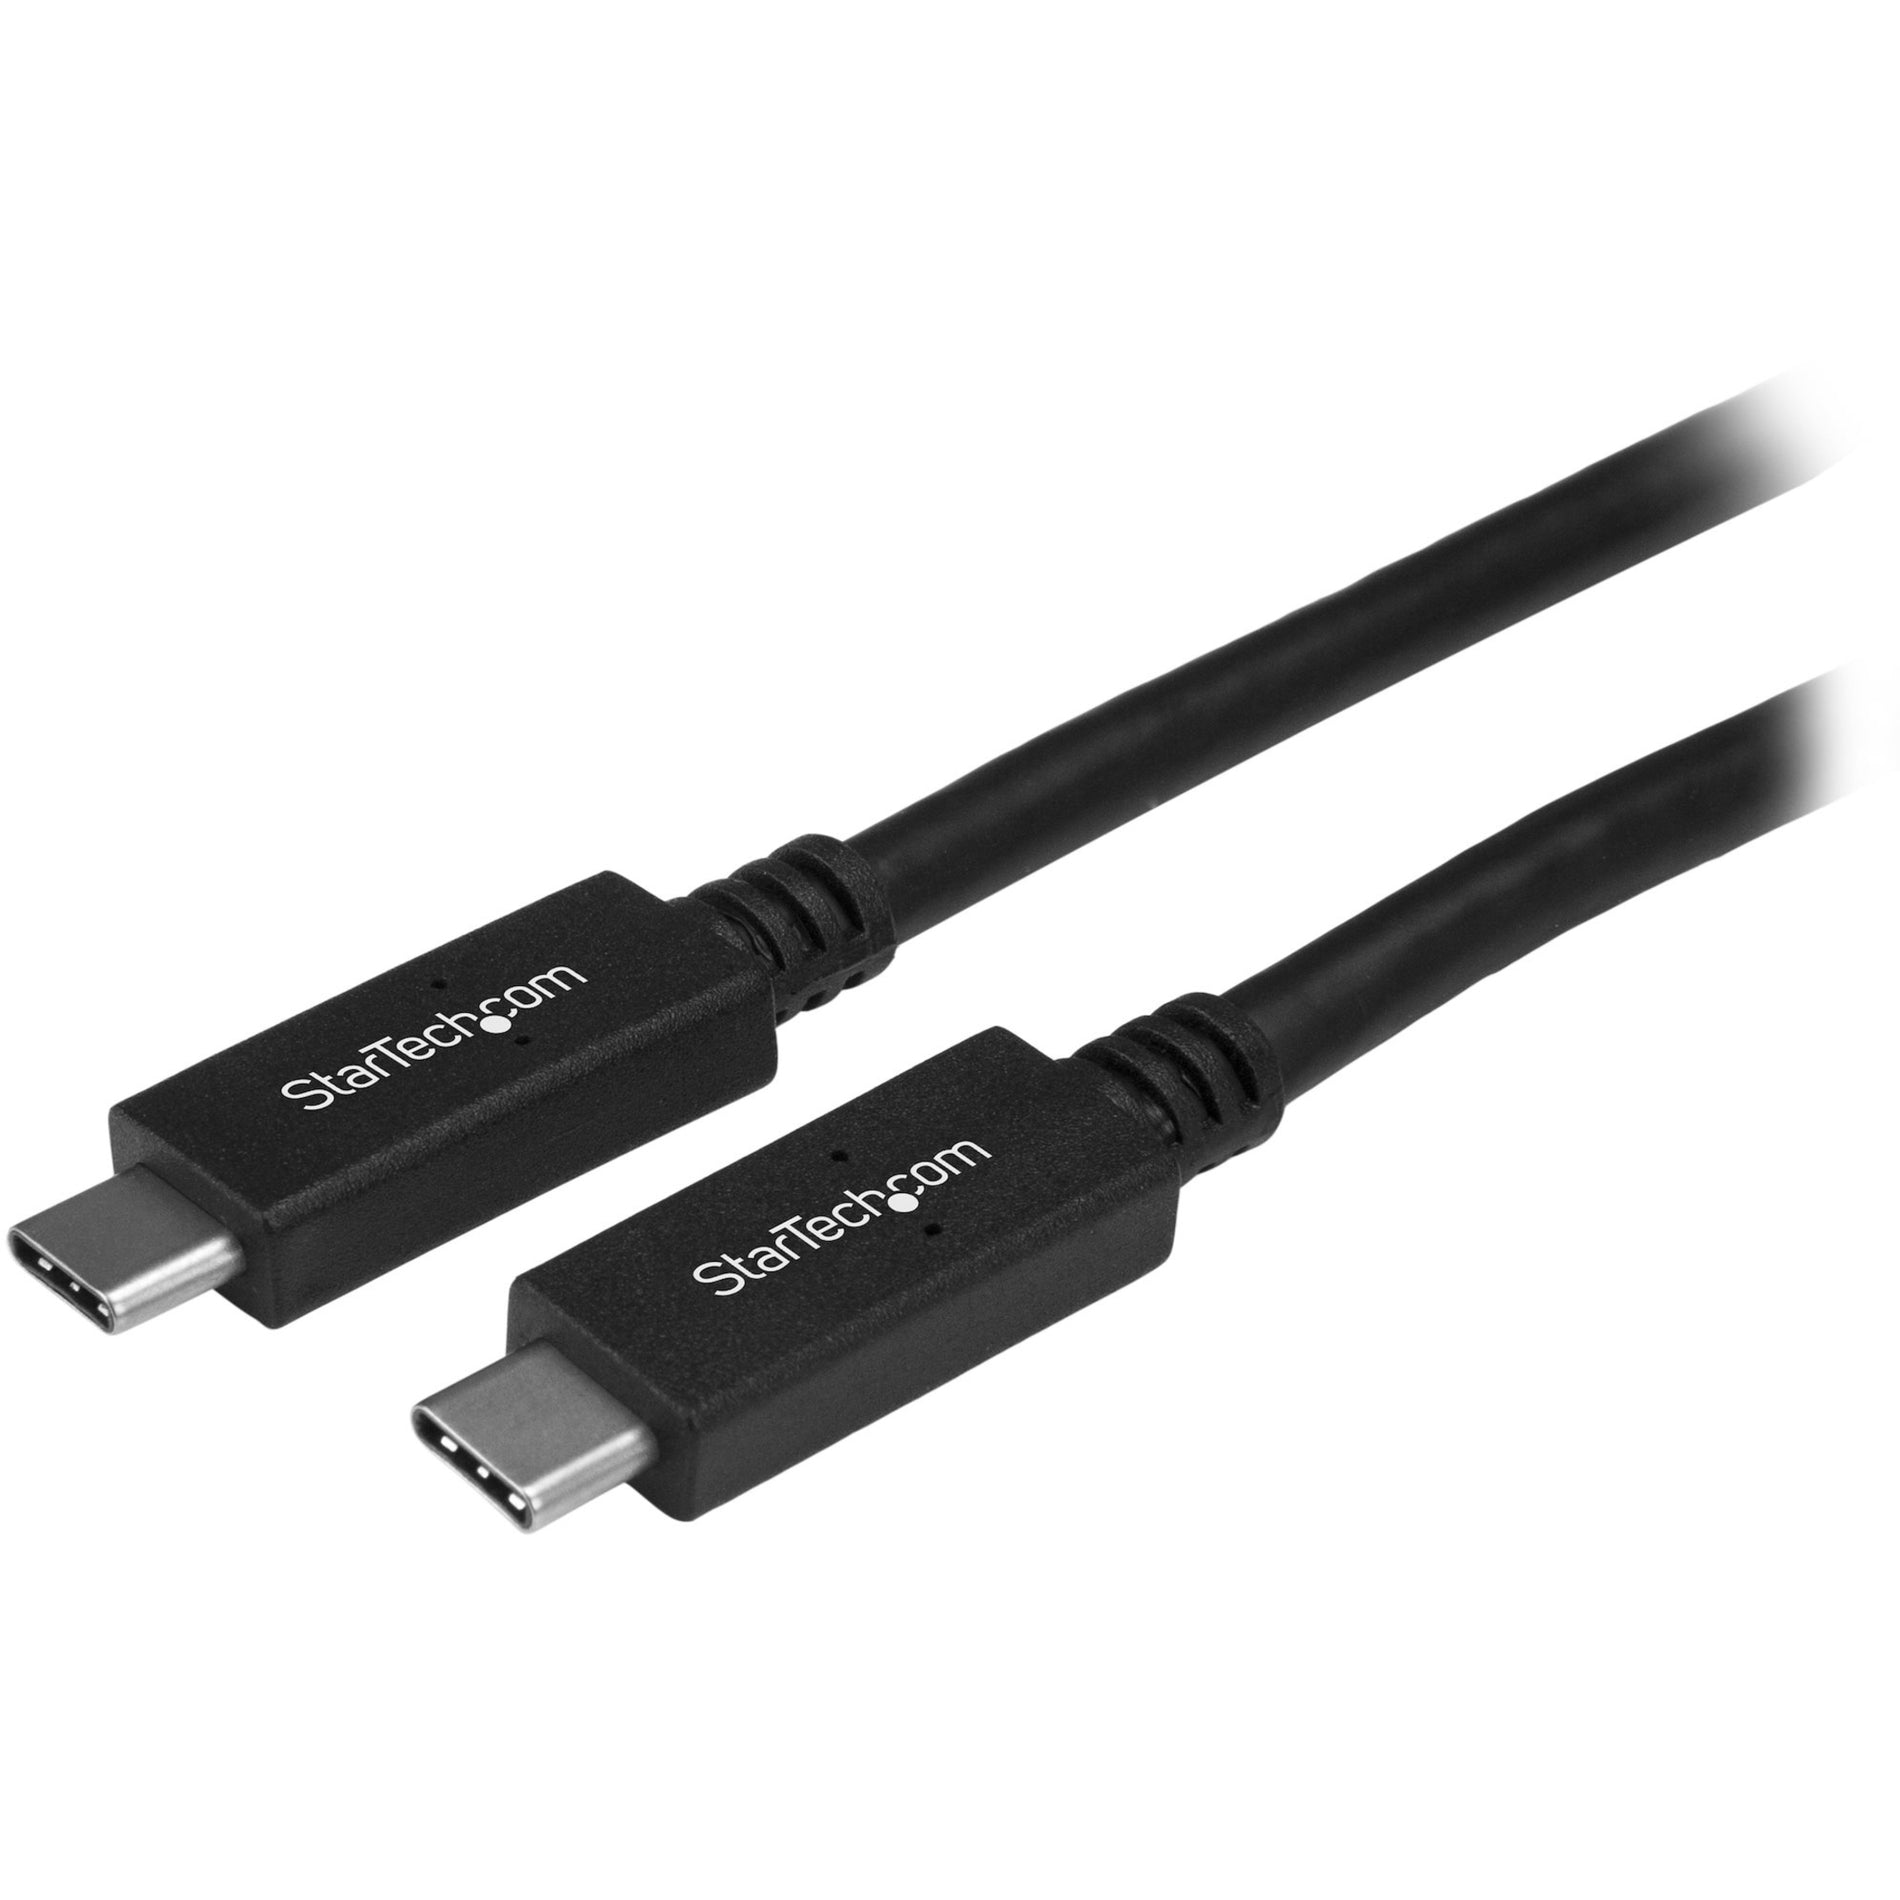 StarTech.com كبل USB31CC1M USB-C كبل 1 م (3 قدم) ، USB Type-C USB 3.1 Gen 2 كبل 10 جيجابت في الثانية